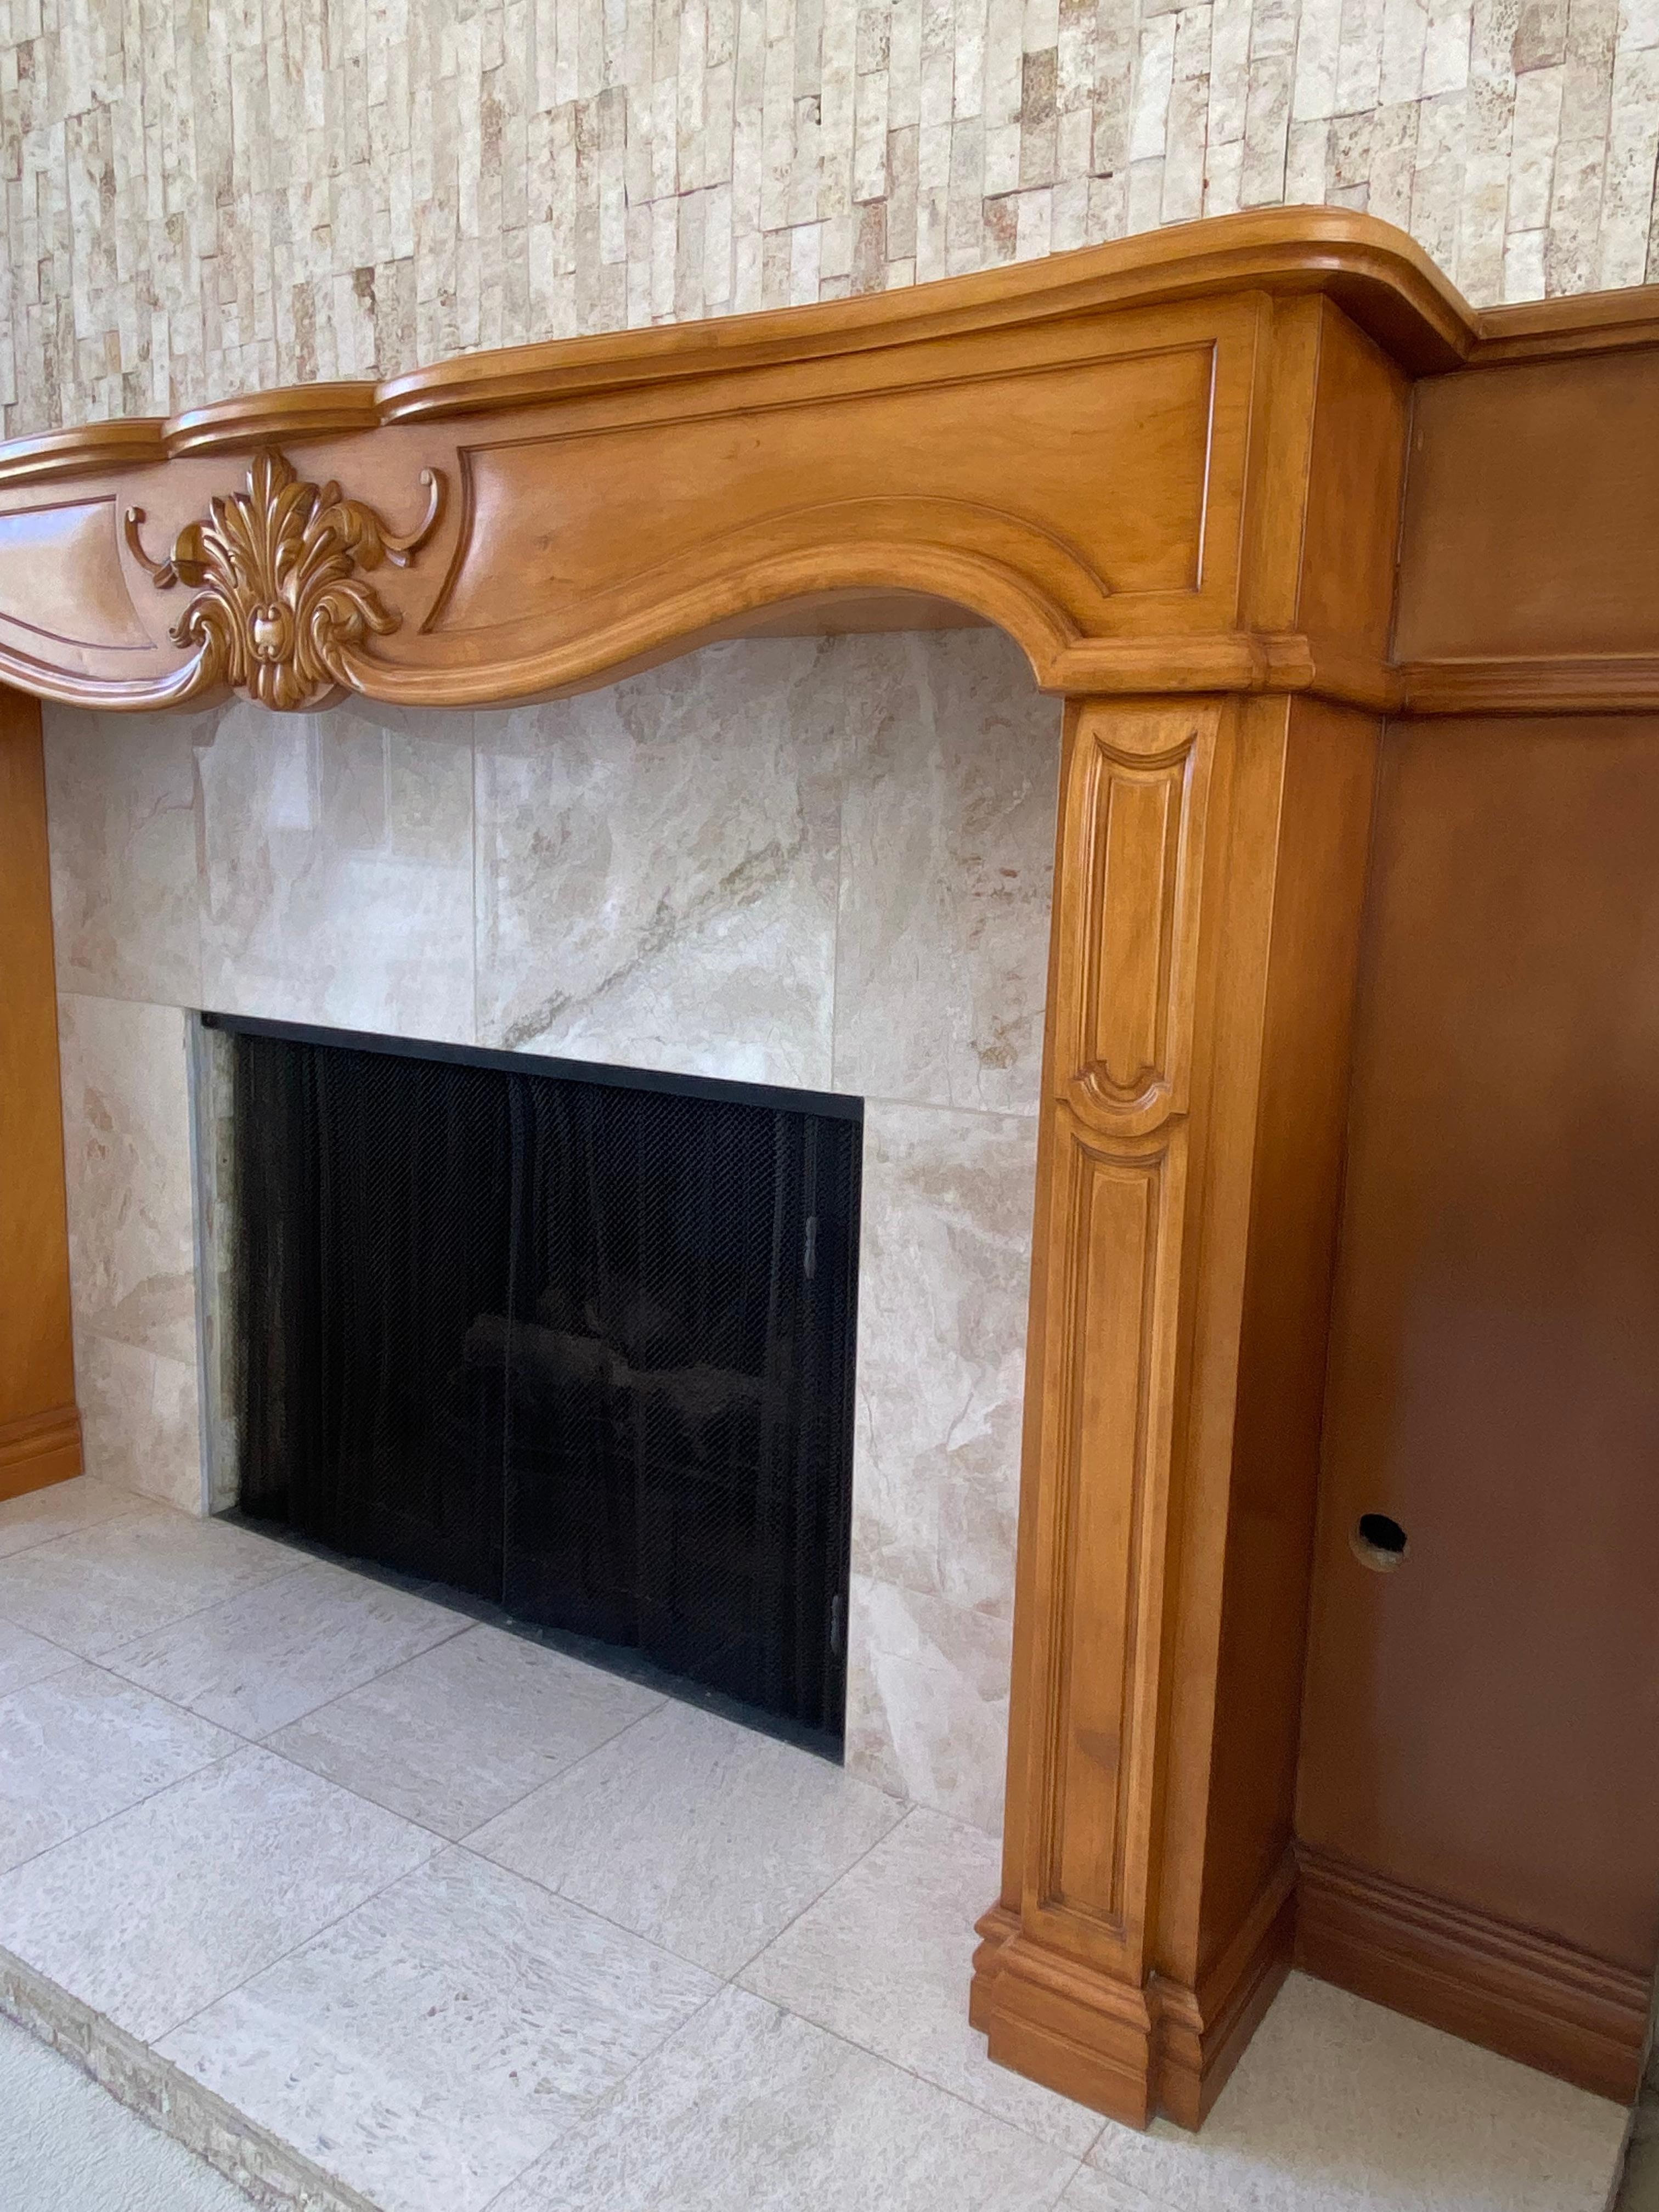 width of fireplace mantel